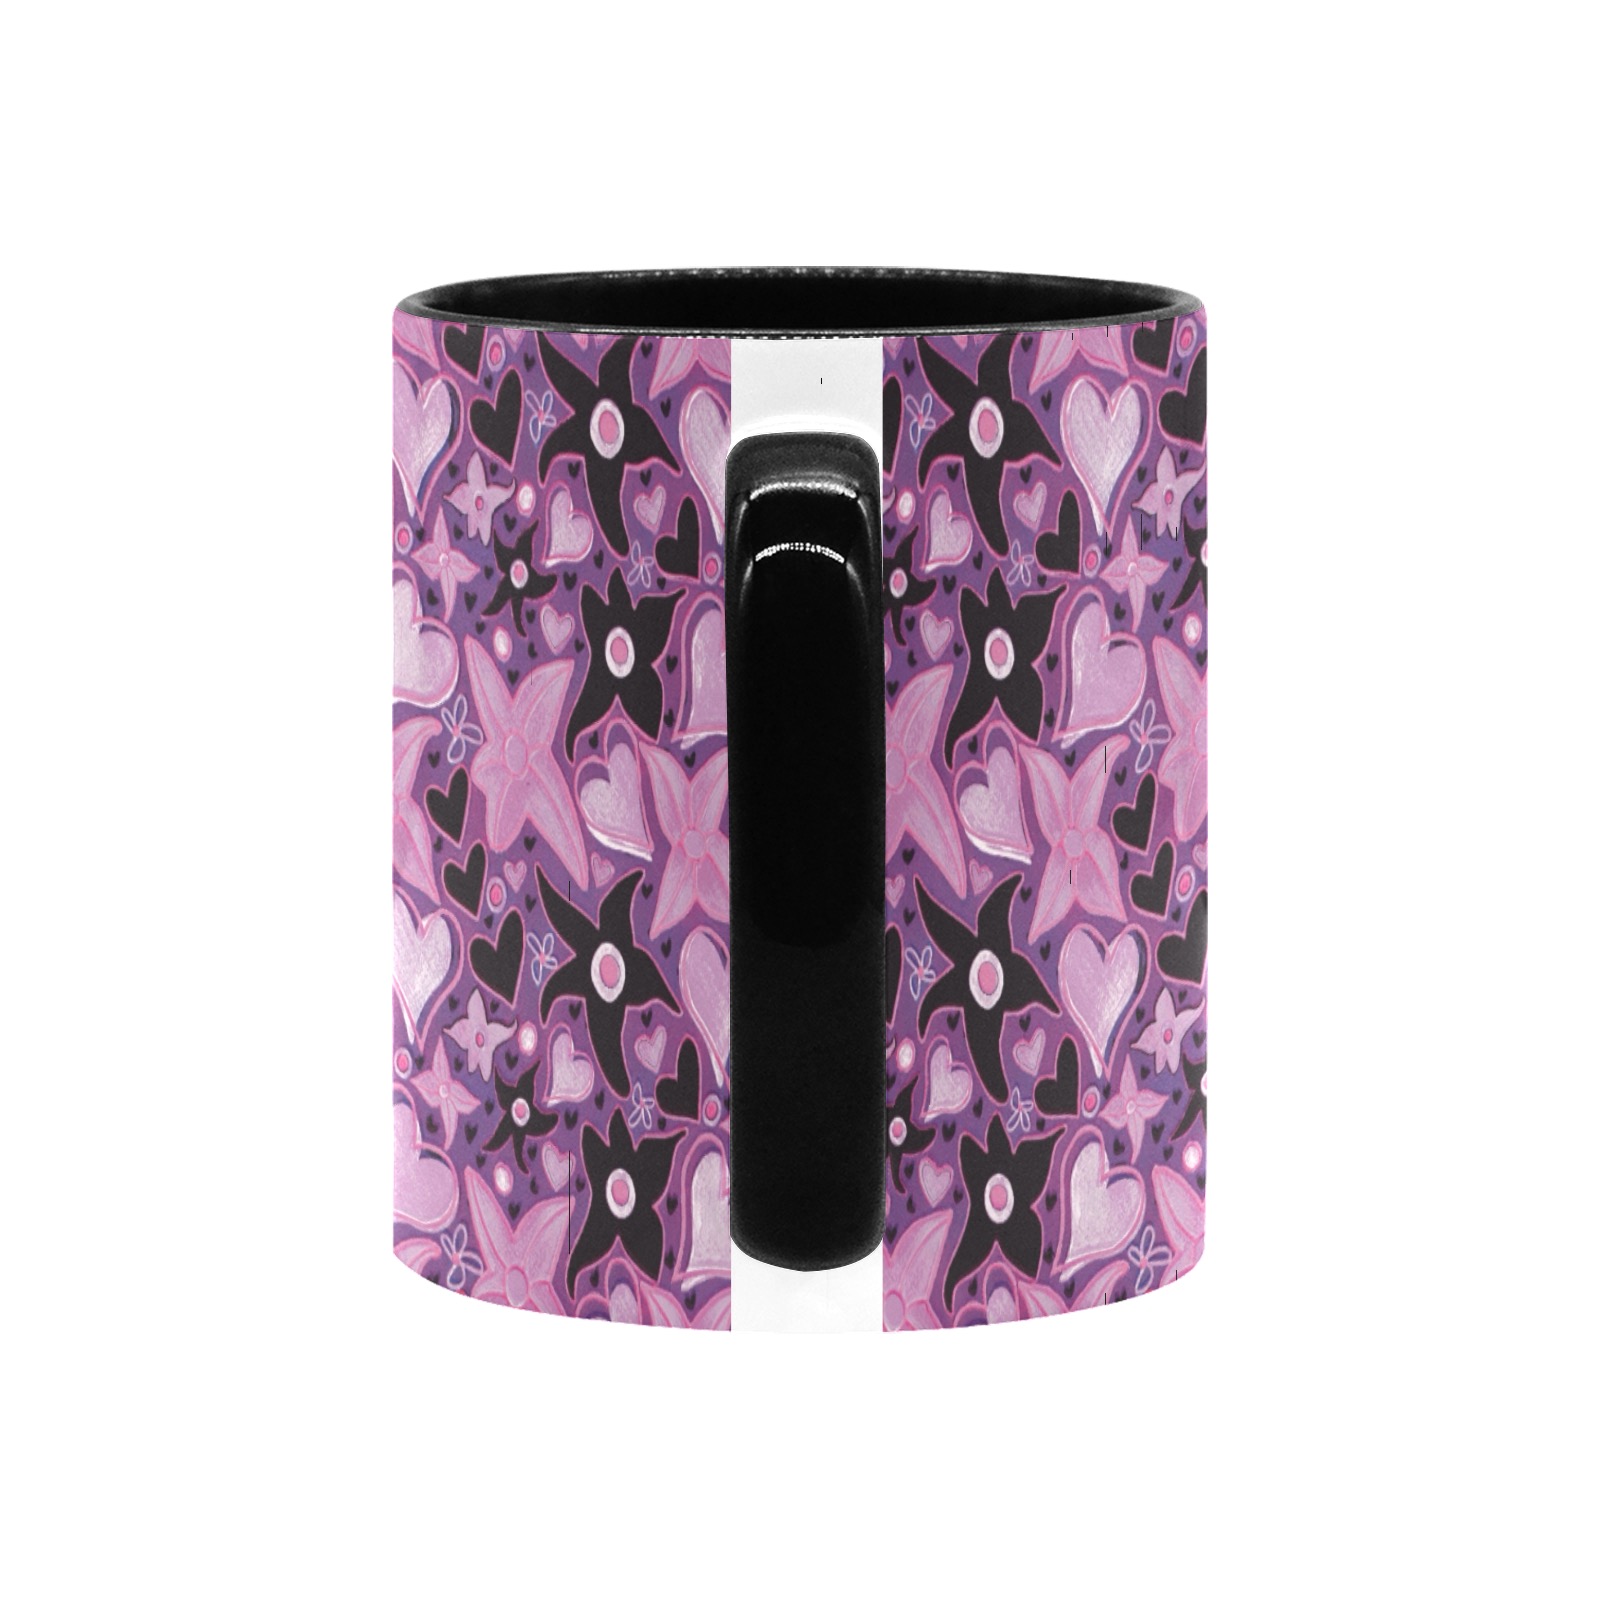 Magic floral pattern Custom Inner Color Mug (11oz)